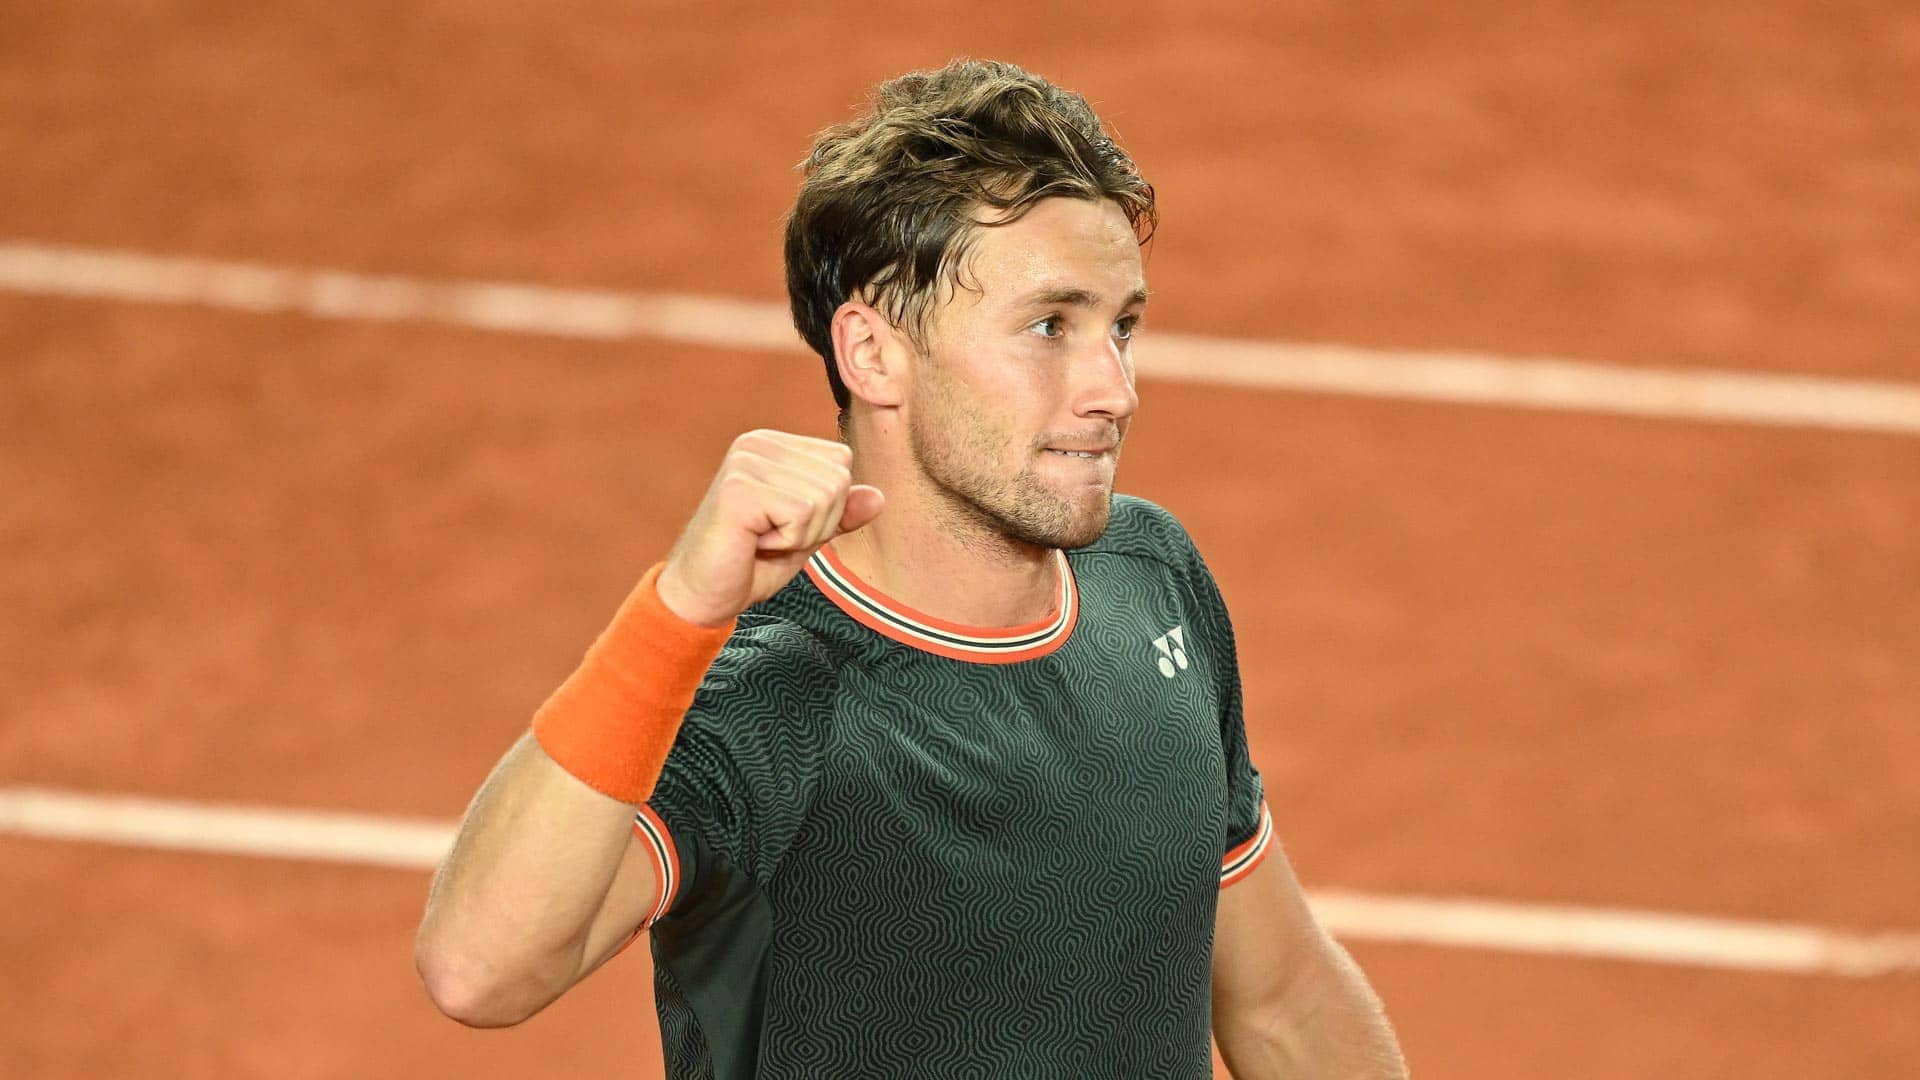 Casper Ruud returns to the Roland Garros quarter-finals for the third consecutive year.